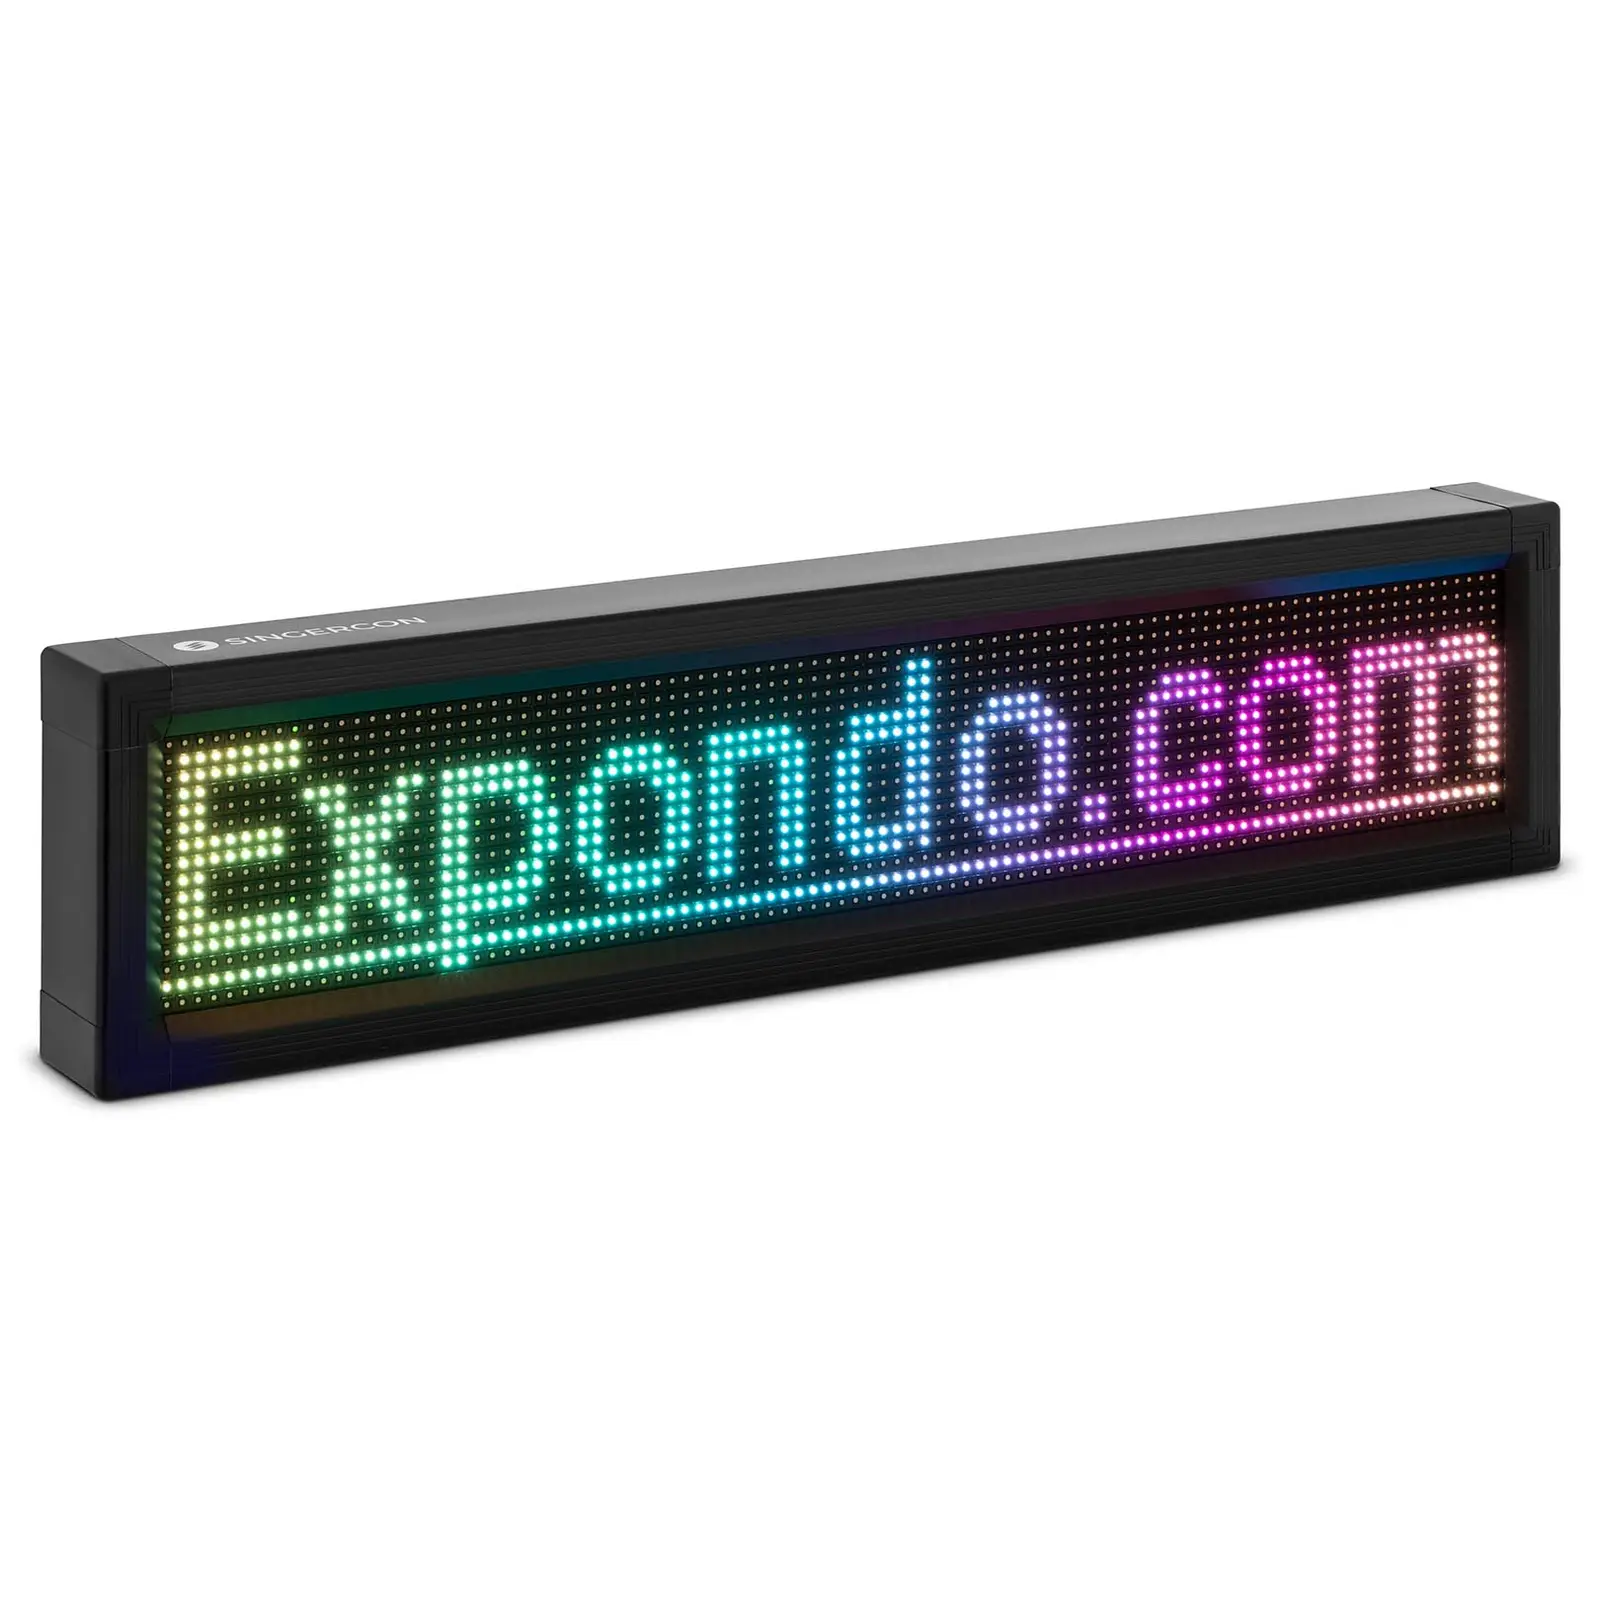 LED-Laufschrift - 96 x 16 farbige LED - 67 x 19 cm - programmierbar via iOS / Android